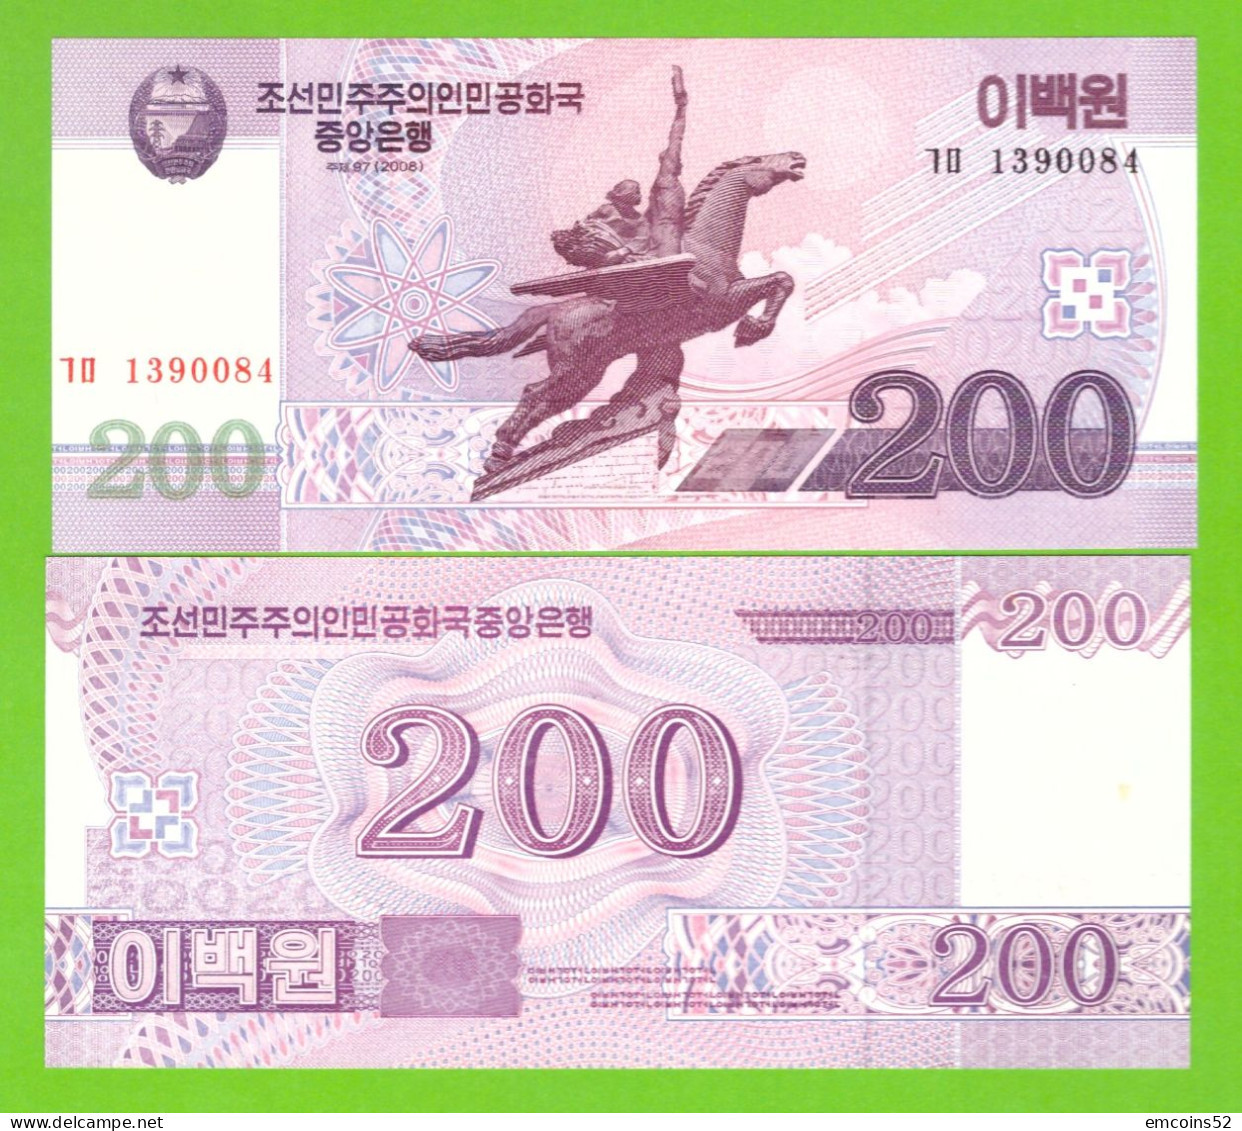 KOREA NORTH 200 WON 2008/2009 P-62(2) UNC - Korea, North